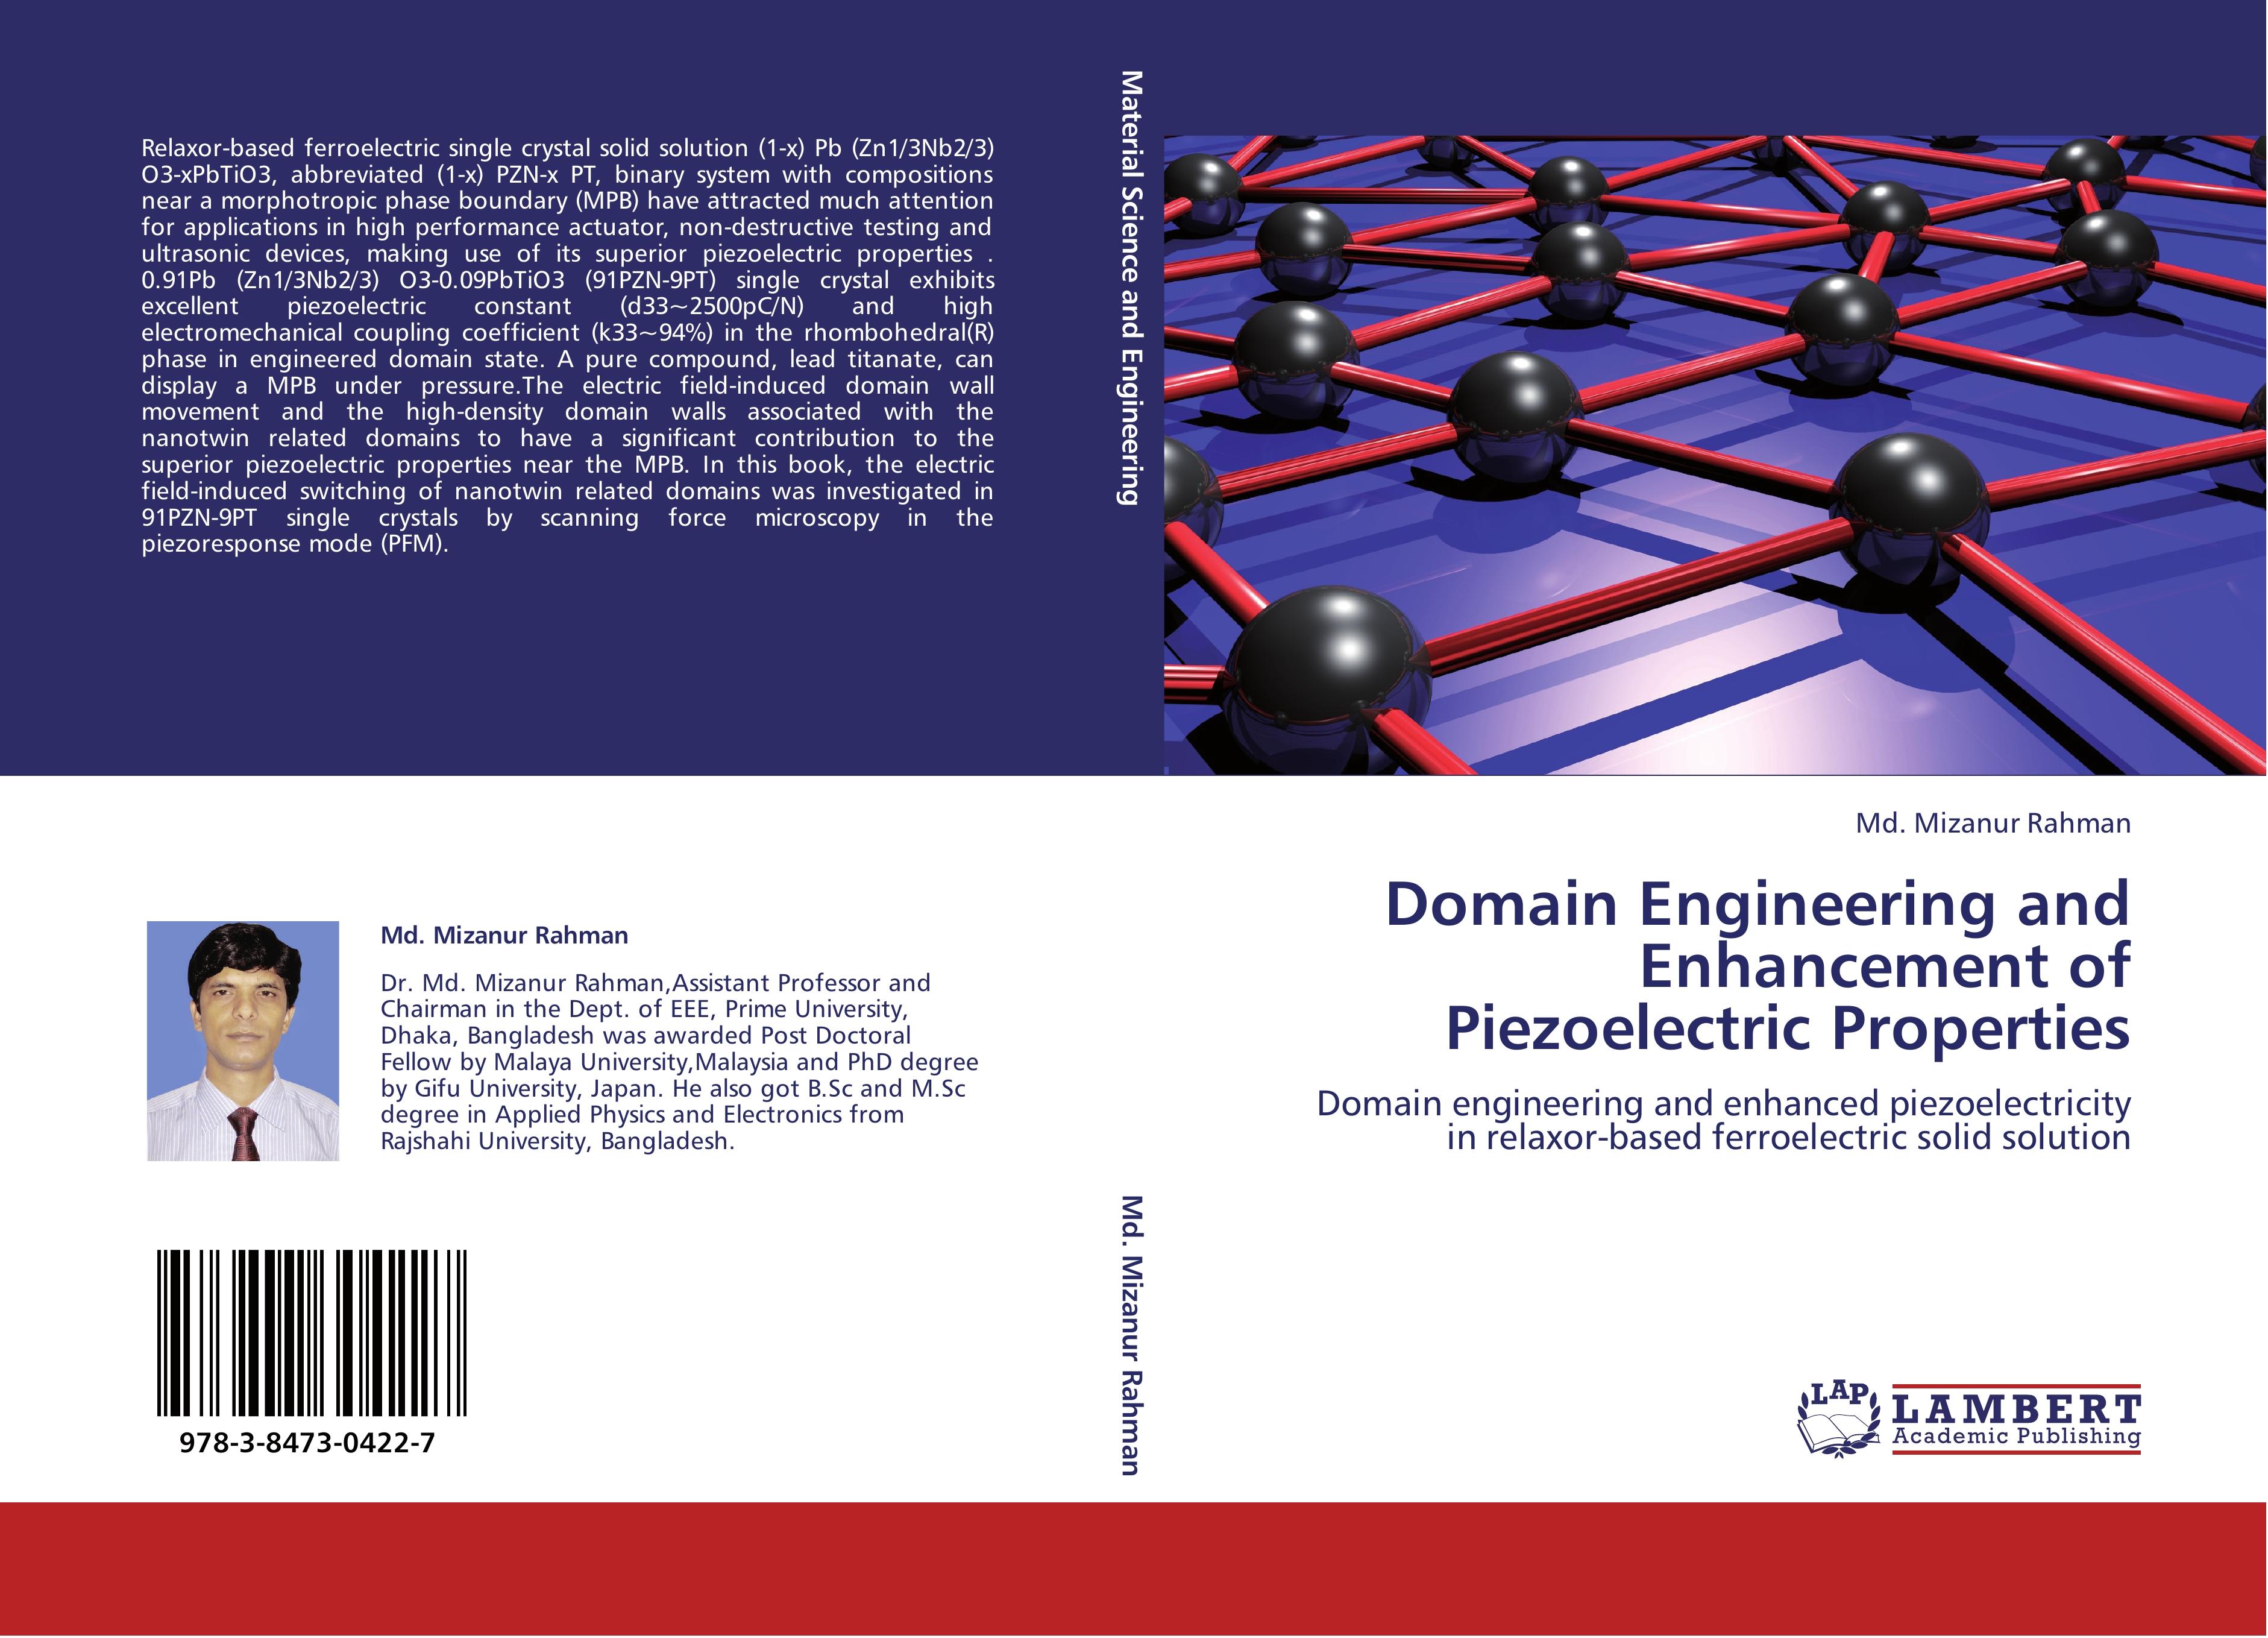 Domain Engineering and Enhancement of Piezoelectric Properties - Md. Mizanur Rahman